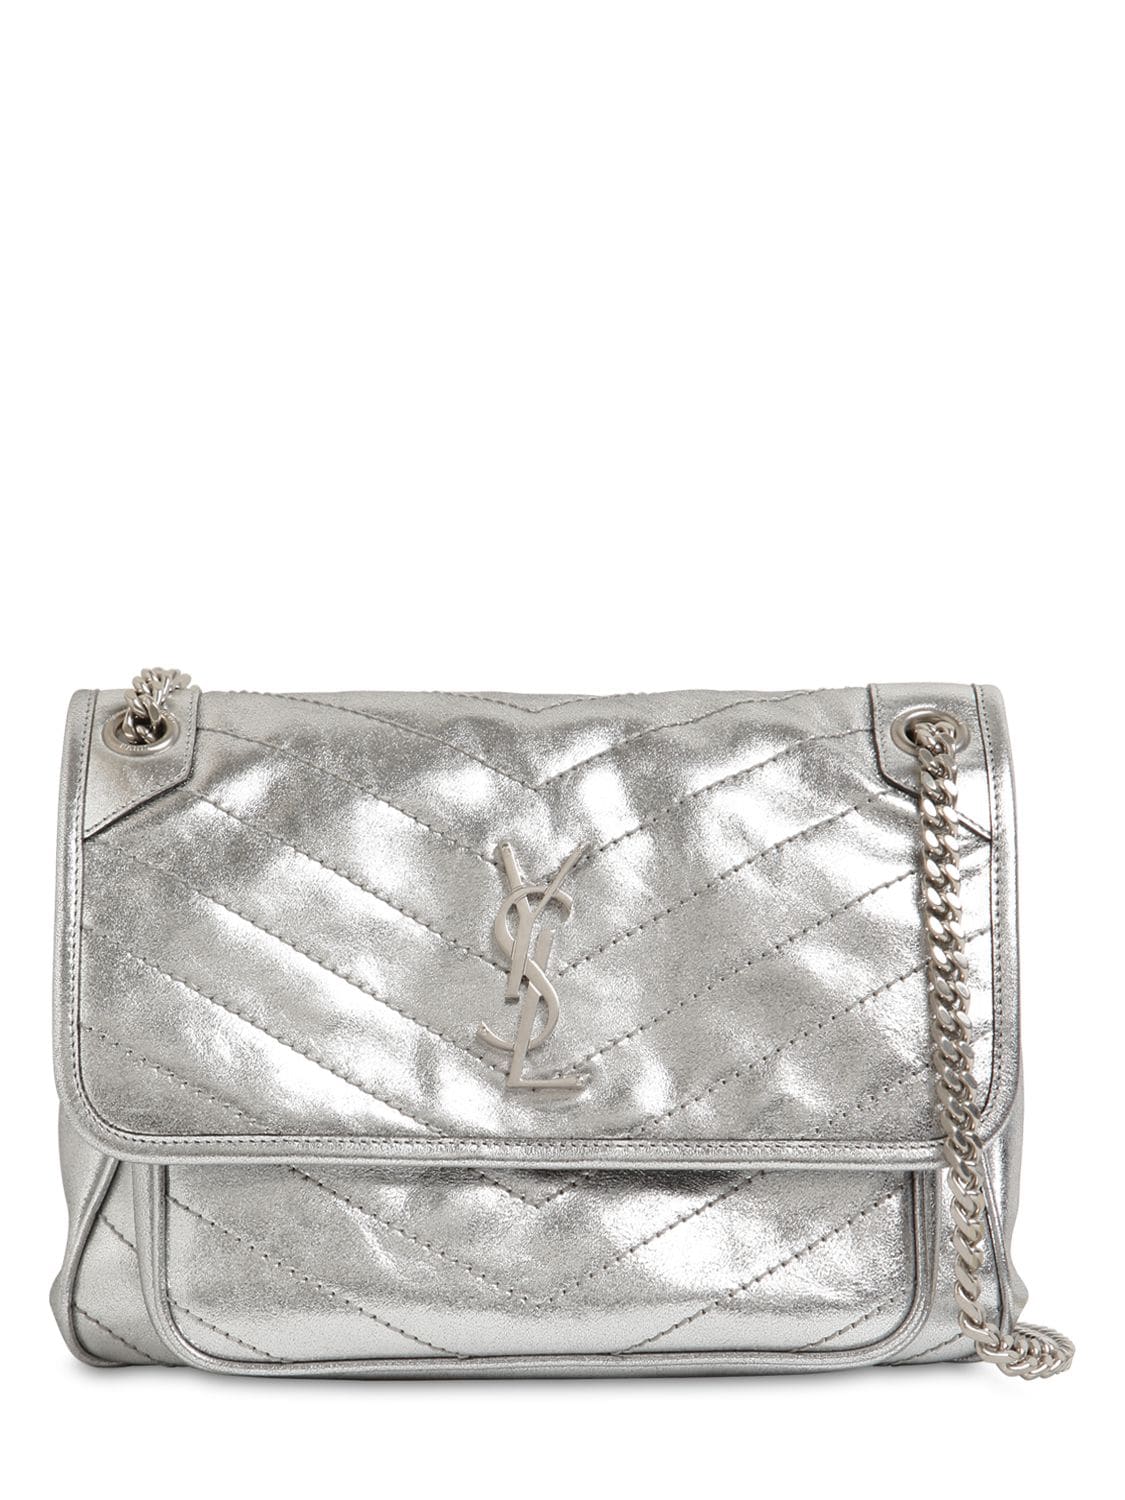 Saint Laurent Niki Monogram Metallic Leather Bag In Silver